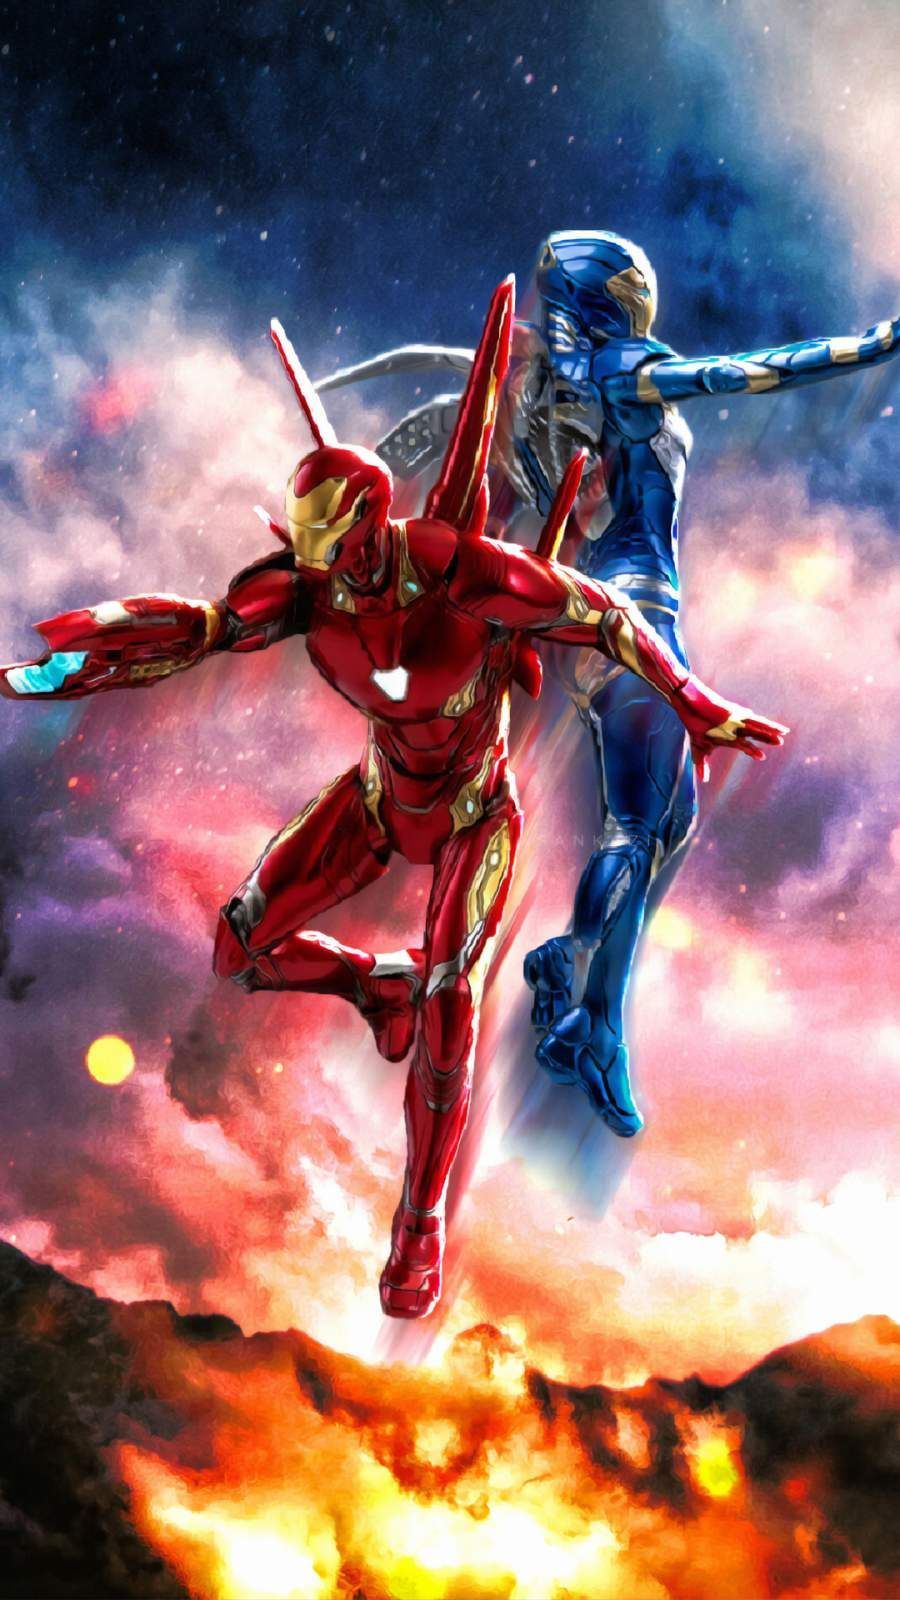 Iron Man and Pepper Potts Rescue Suit iPhone Wallpaper. Iron man art, Marvel superhero posters, Iron man HD wallpaper